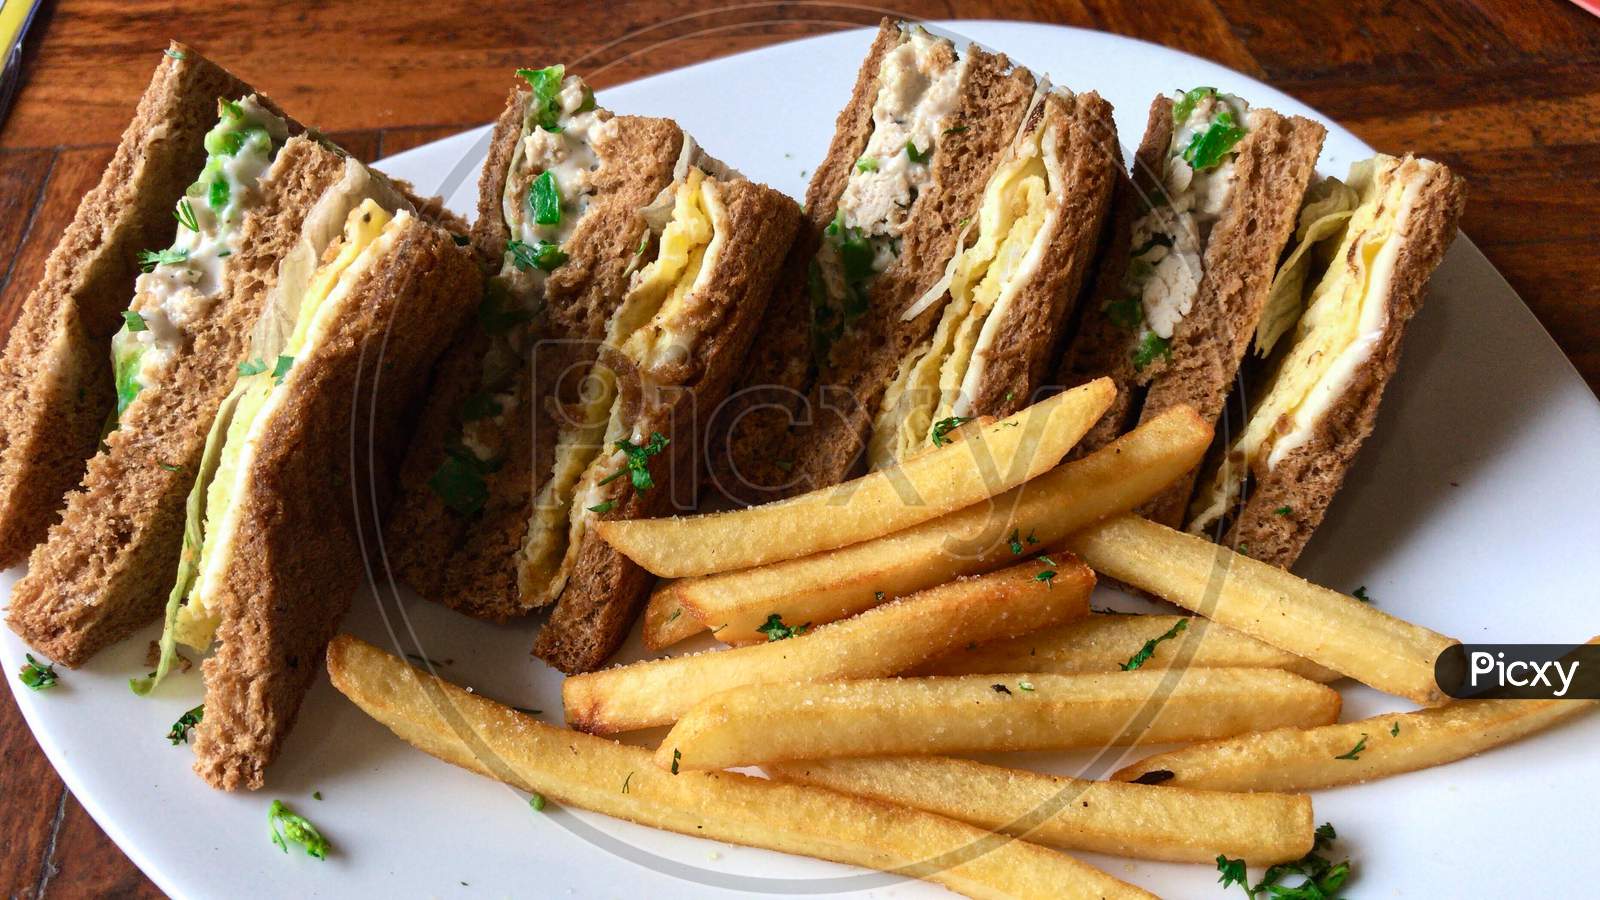 Chicken sandwich and fries.